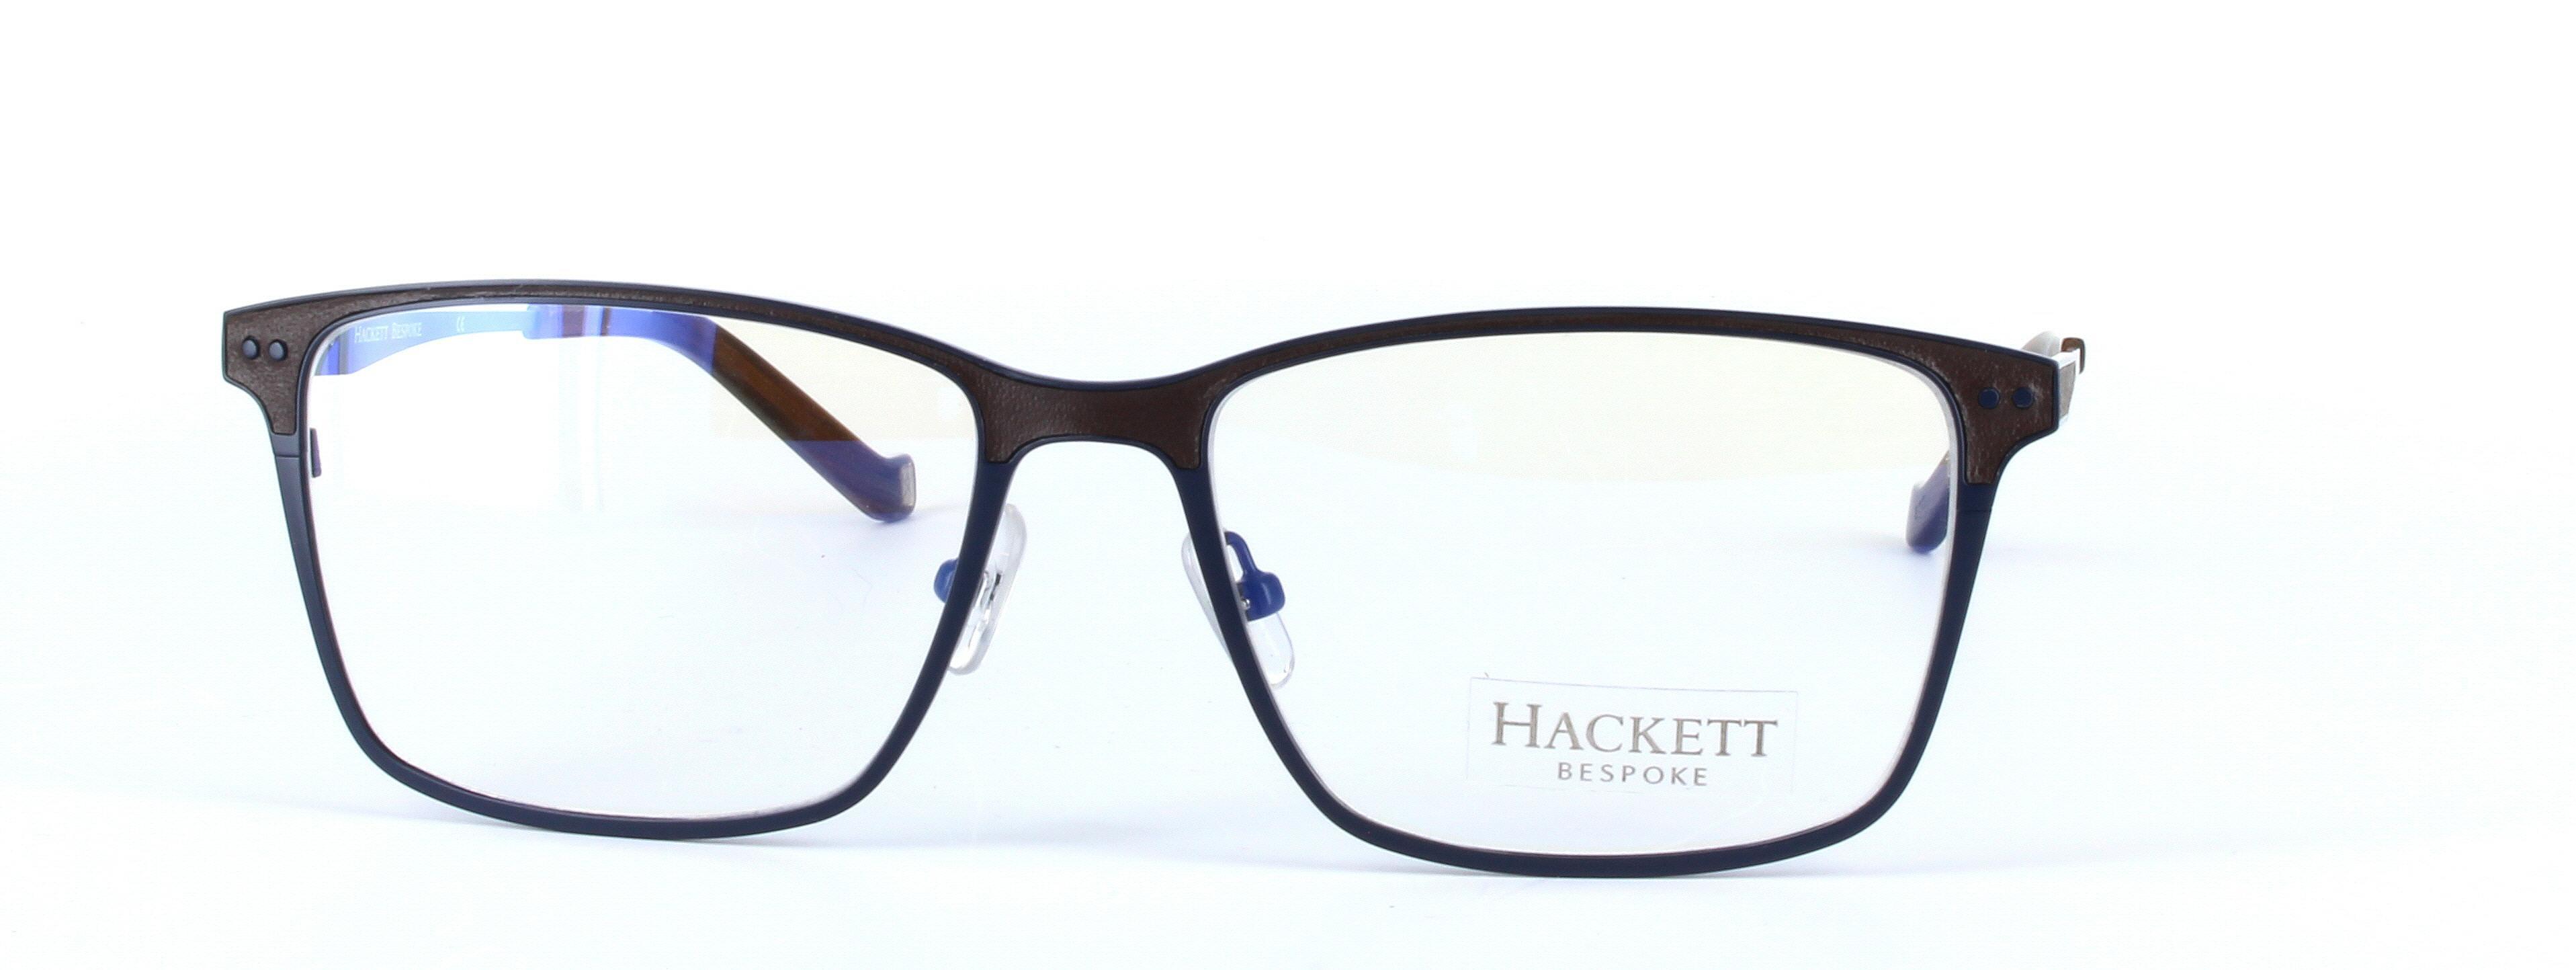 HACKETT BESPOKE (176-684) Blue Full Rim Oval Square Metal Glasses - Image View 5